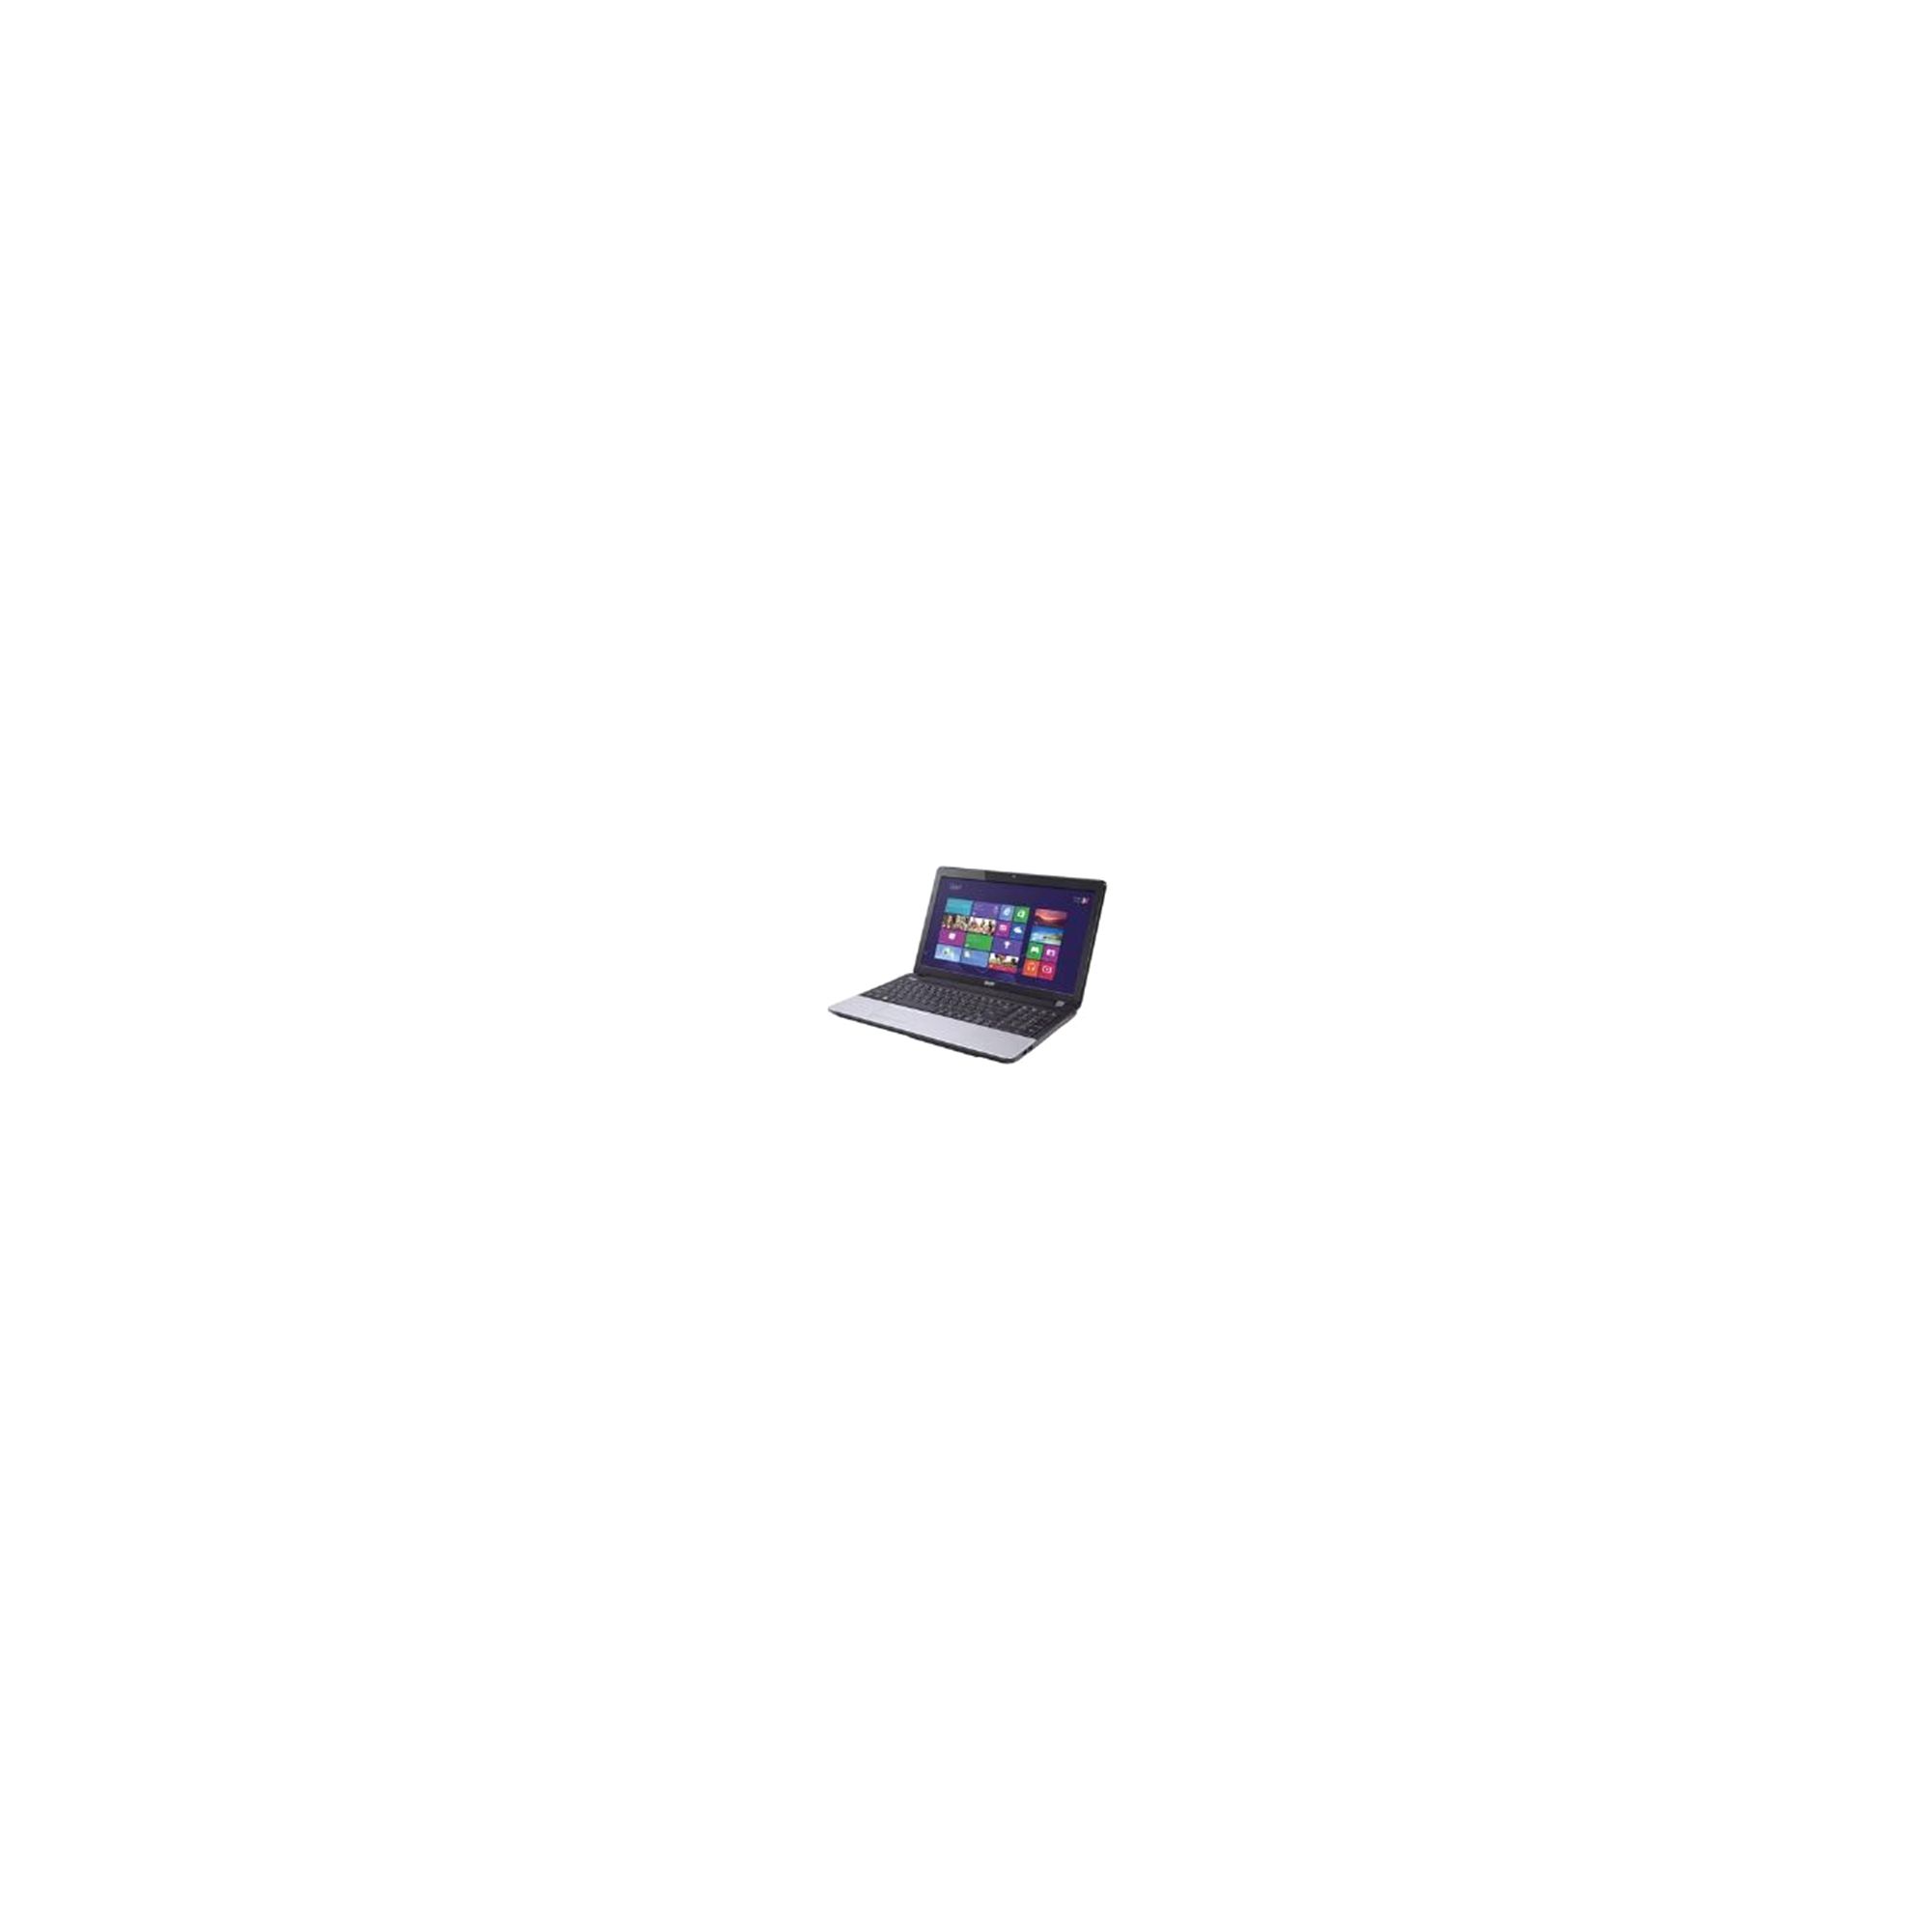 Acer TravelMate P253-M (15.6 inch) Notebook Core i5 (3230M) 2.6GHz 4GB 500GB DVD-SM DL WLAN BT Webcam Windows 7 Pro 64-bit/Windows 8 Pro 64-bit (UMA